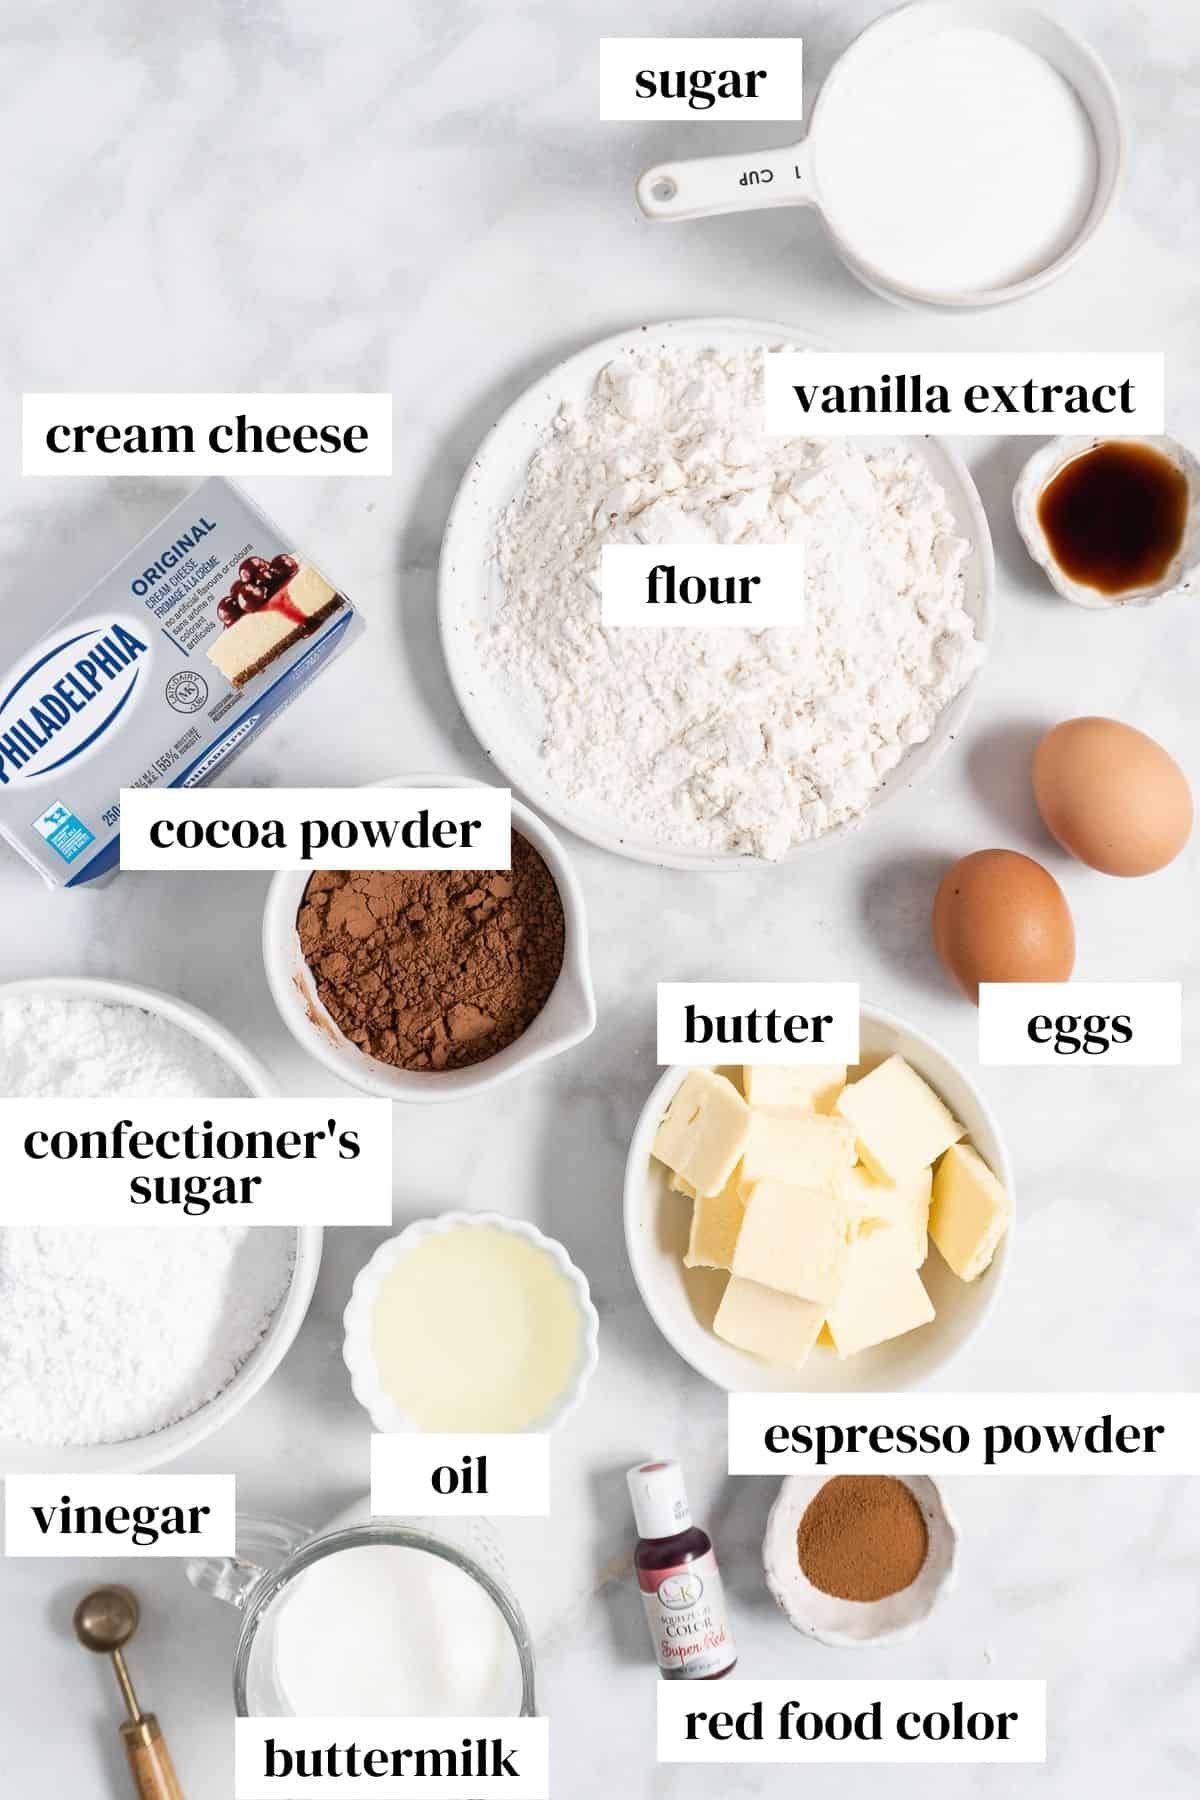 sugar, flour, vanilla extract, eggs, butter, cream cheese, cocoa powder, confectioner's sugar, oil, red food coloring, and espresso powder on a marble countertop.